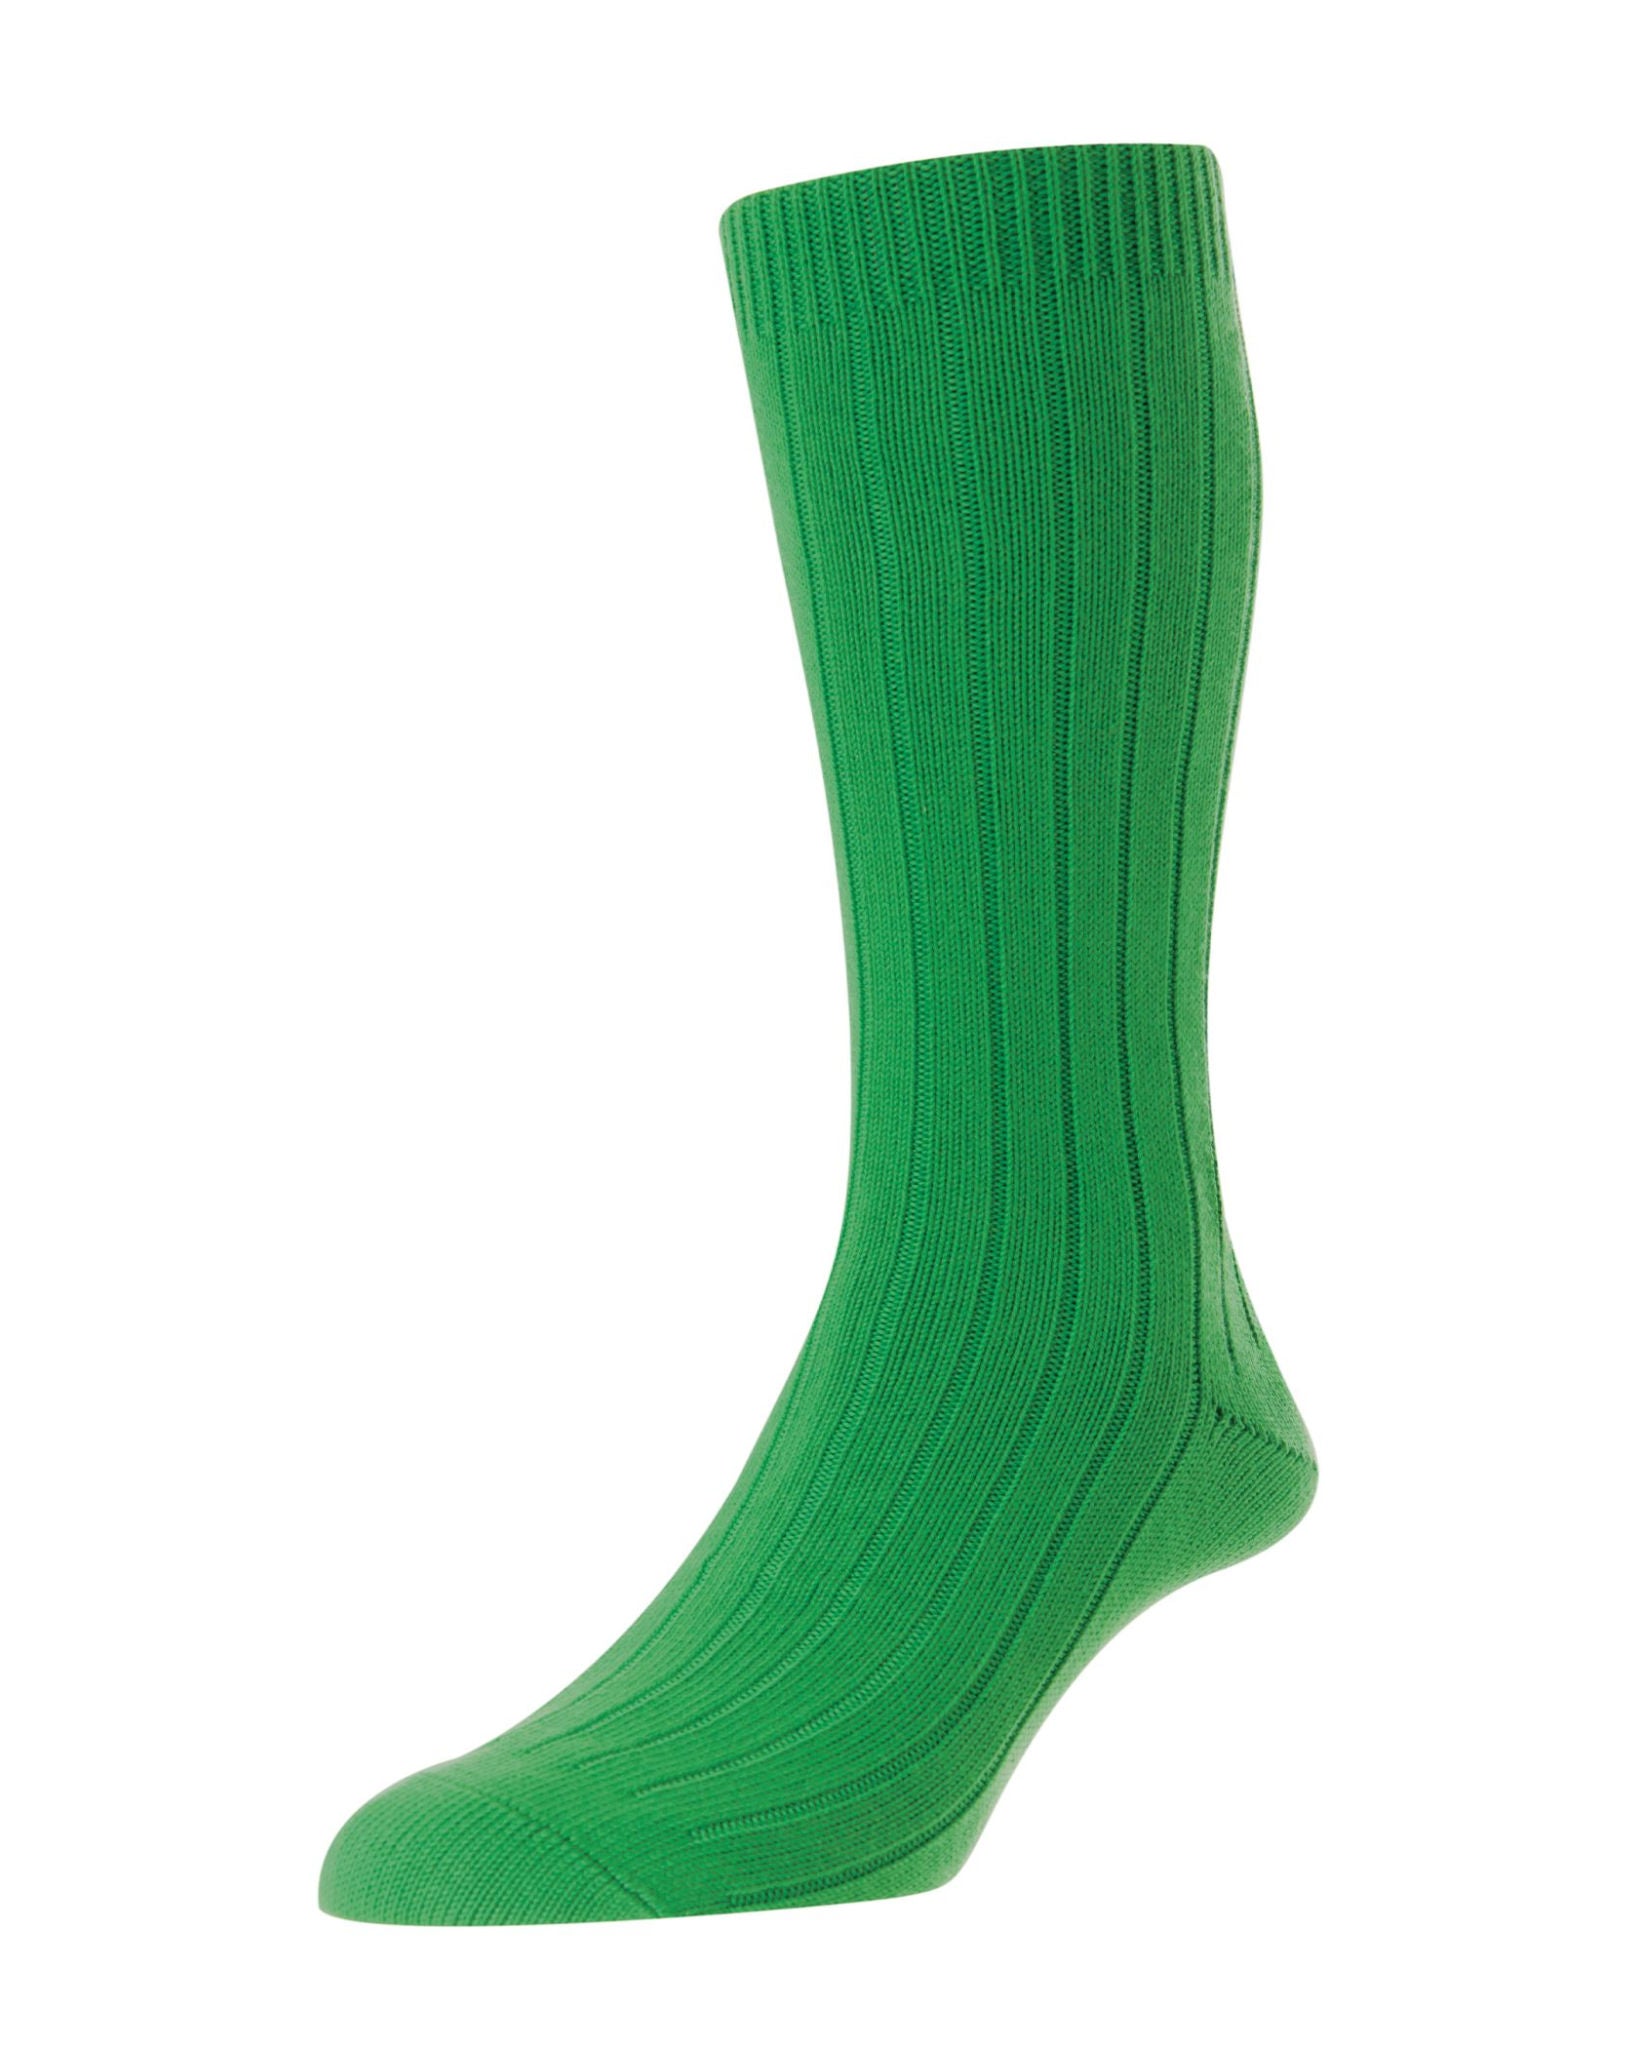 Seaford Socks - Emerald